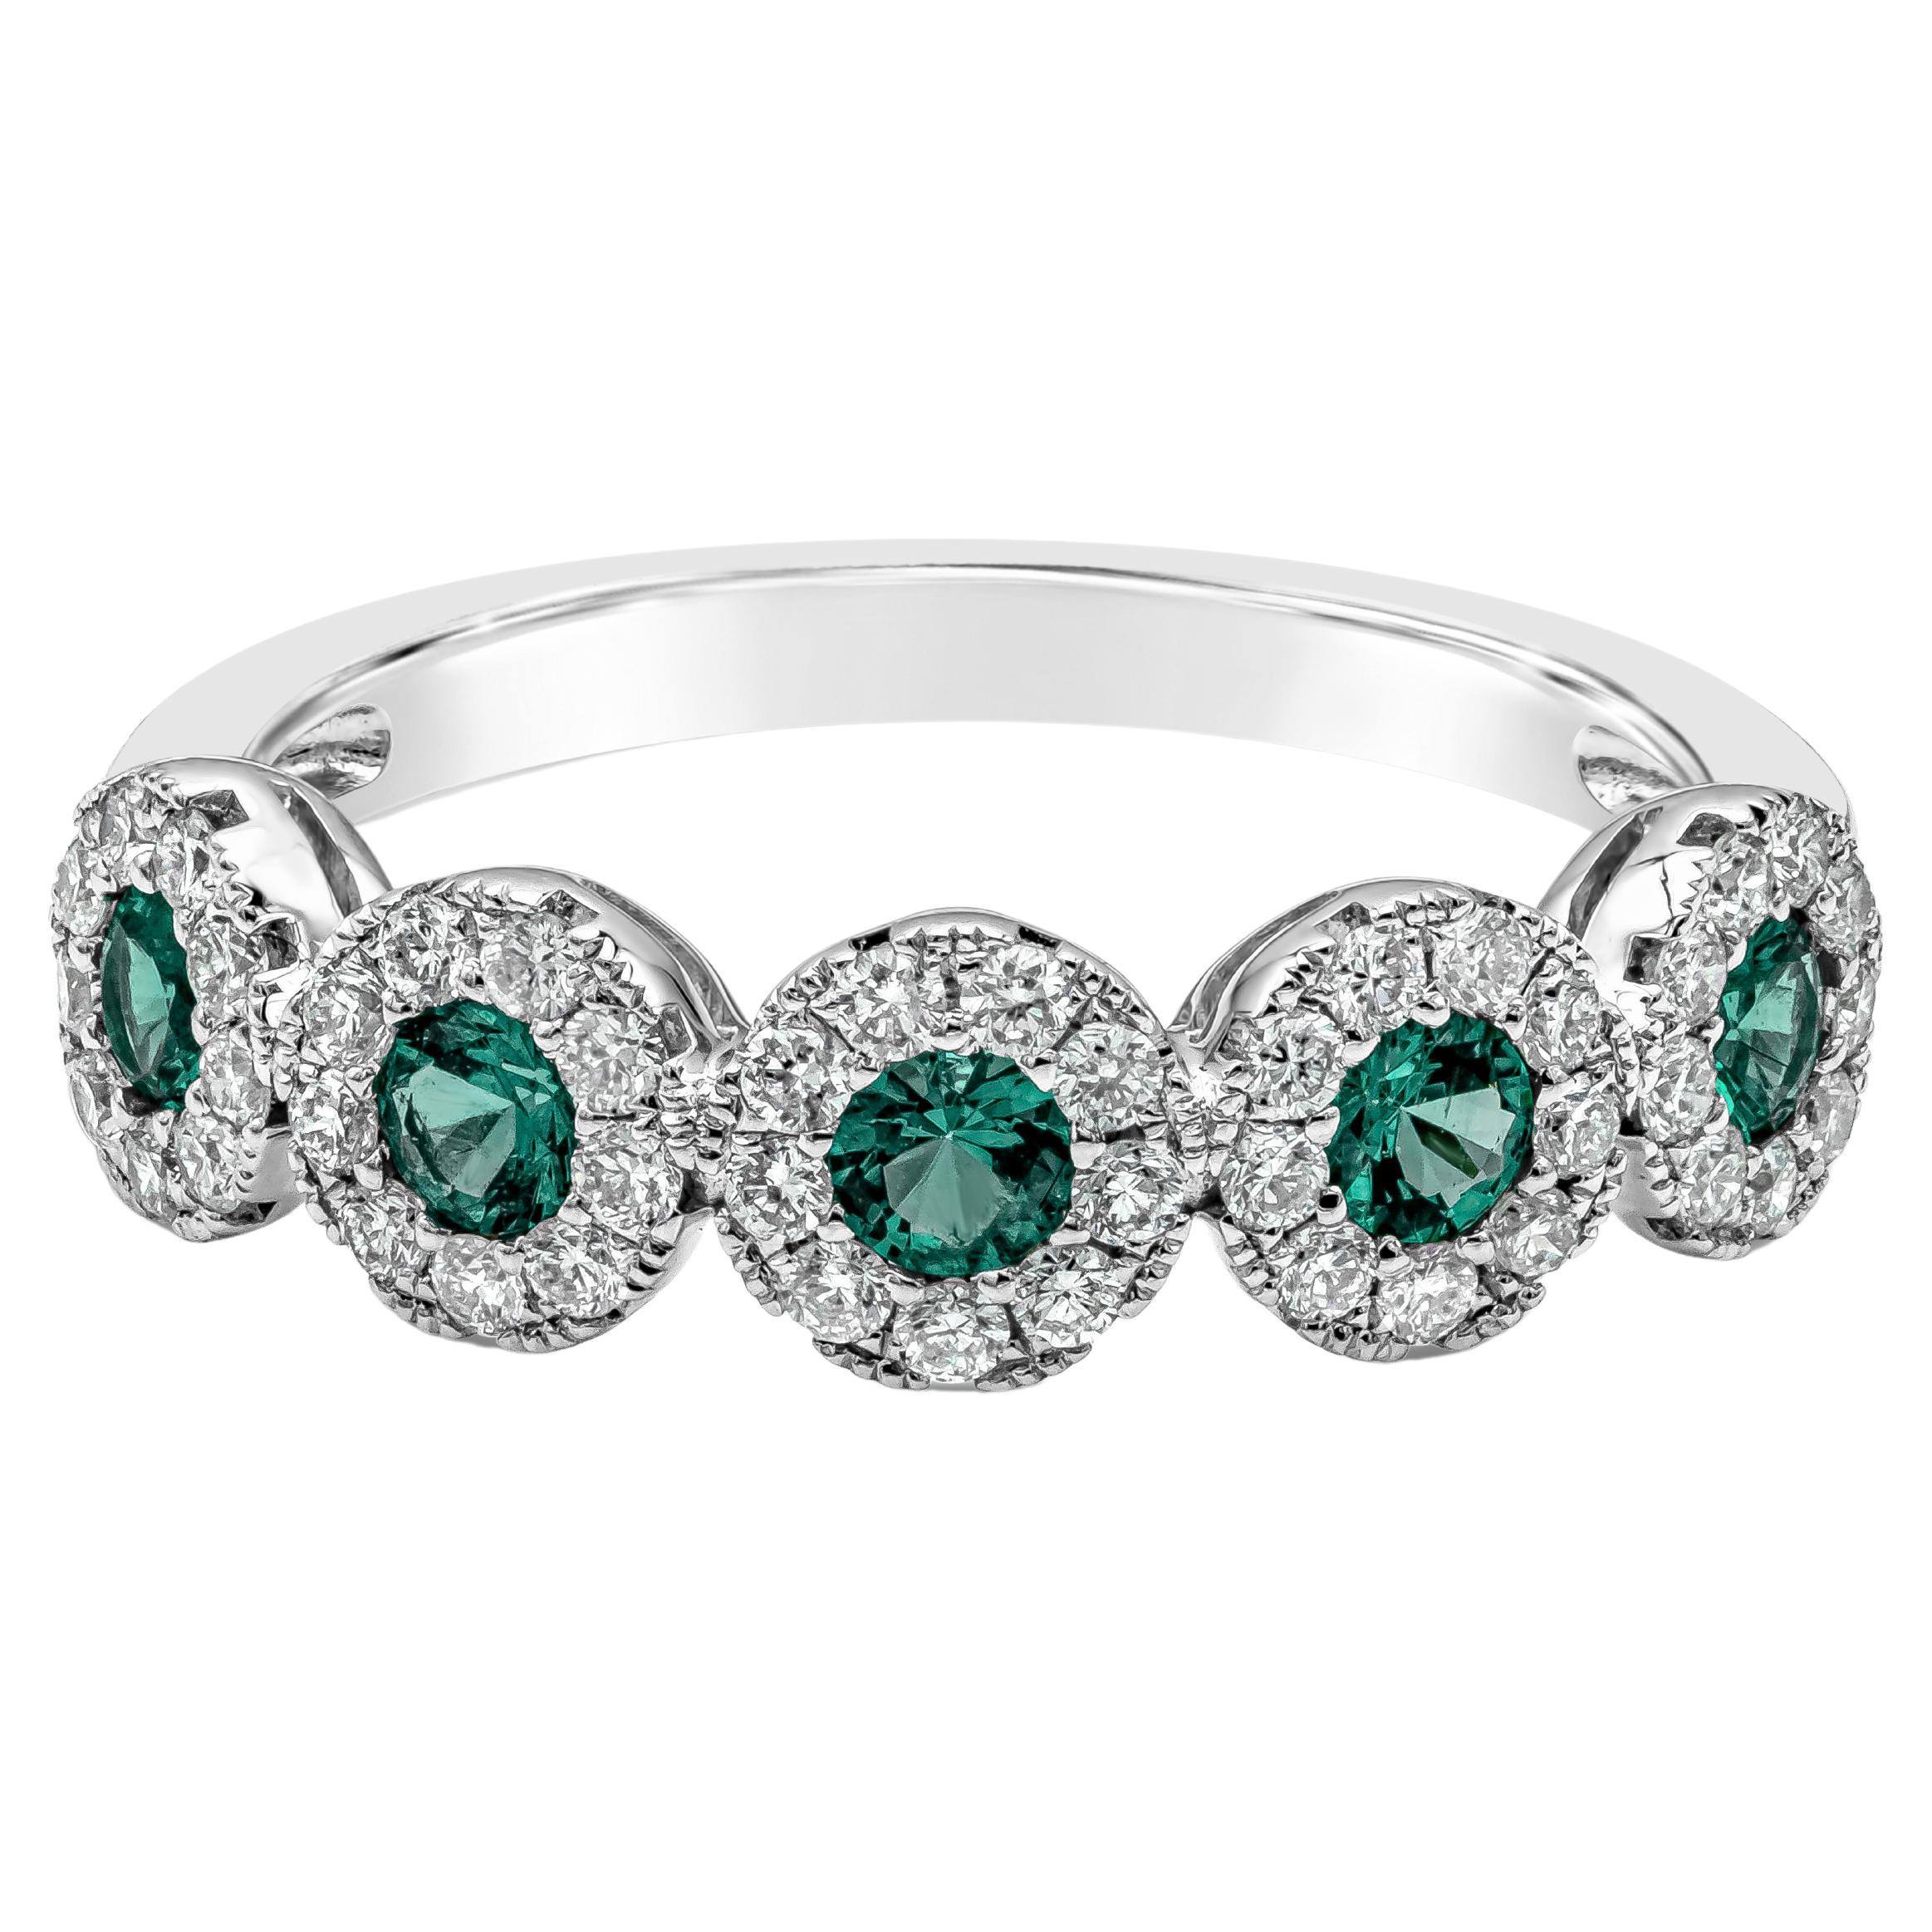 Roman Malakov, 0.35 Carat Total Green Emerald Five Stone Ring in White Gold